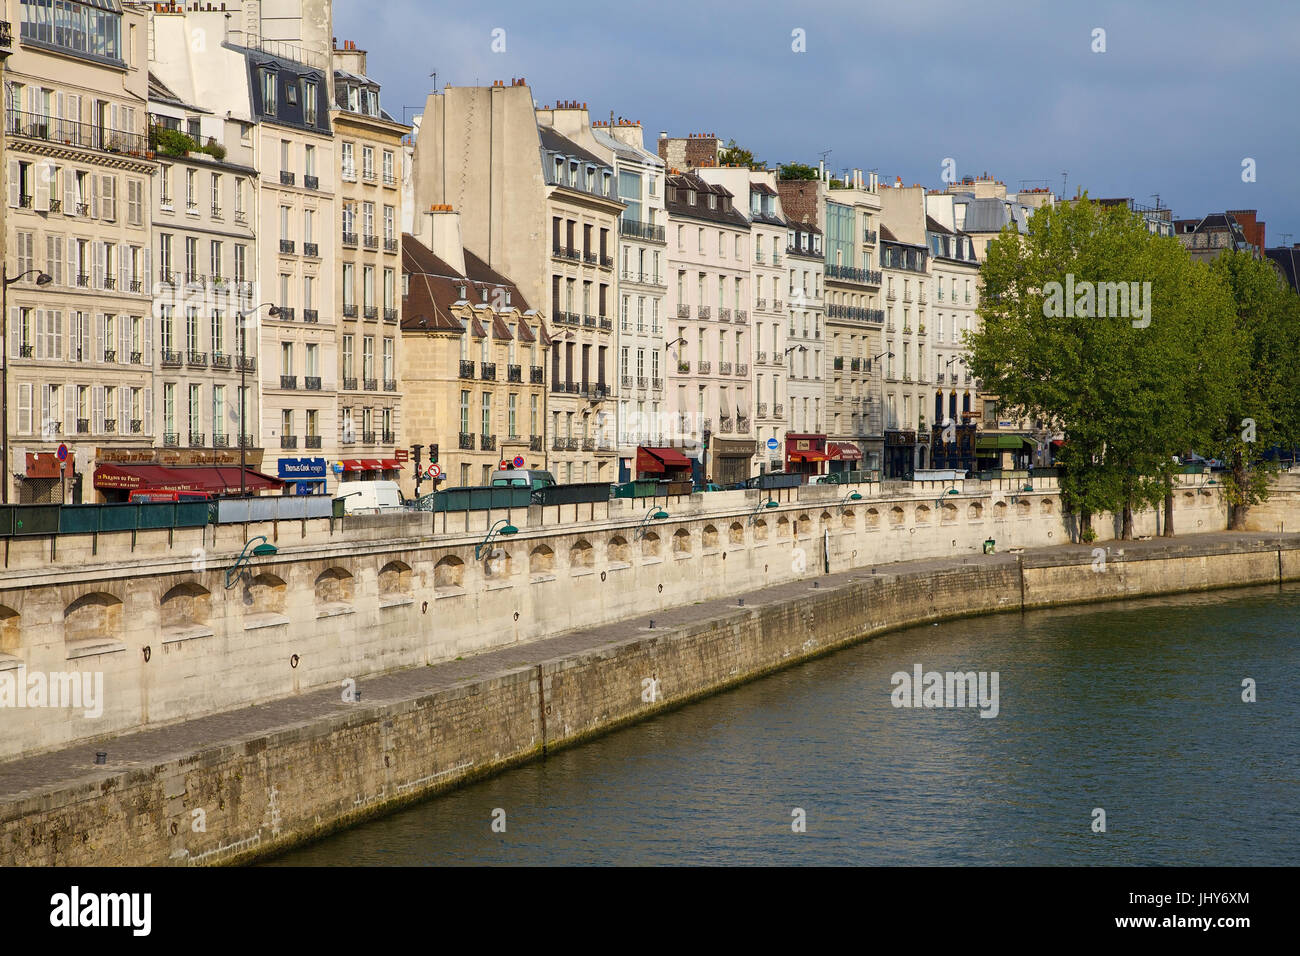 House line in his, Paris, France - Row of houses At his river, Paris, France, Häuserzeile an der Seine, Frankreich - Row of houses at Seine river Stock Photo